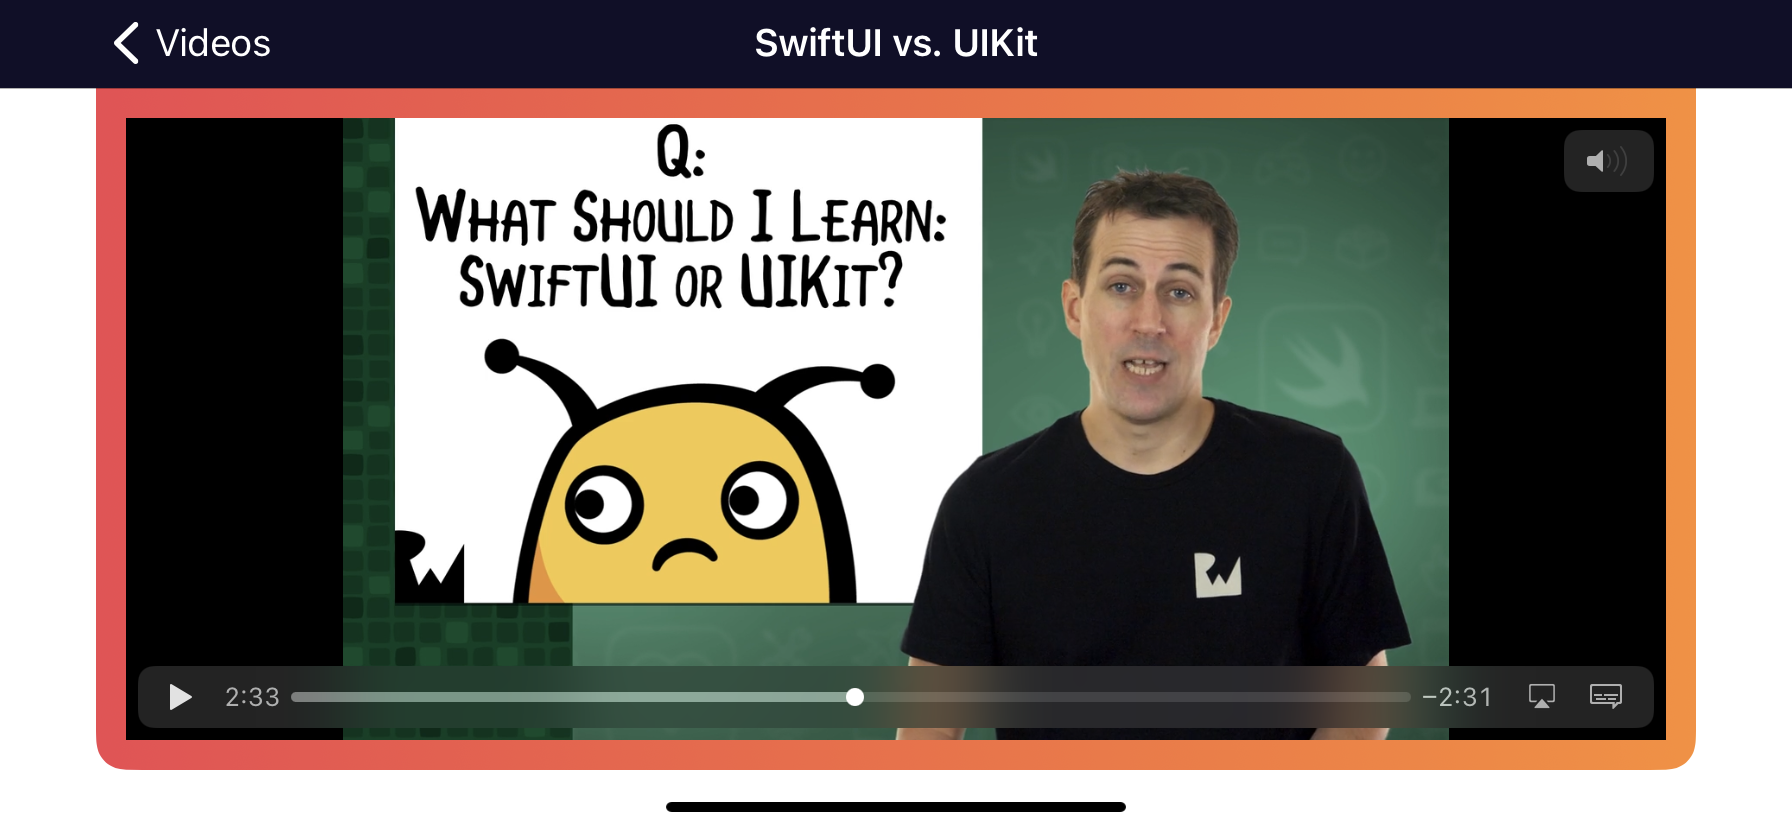 SwiftUI or UIKit?